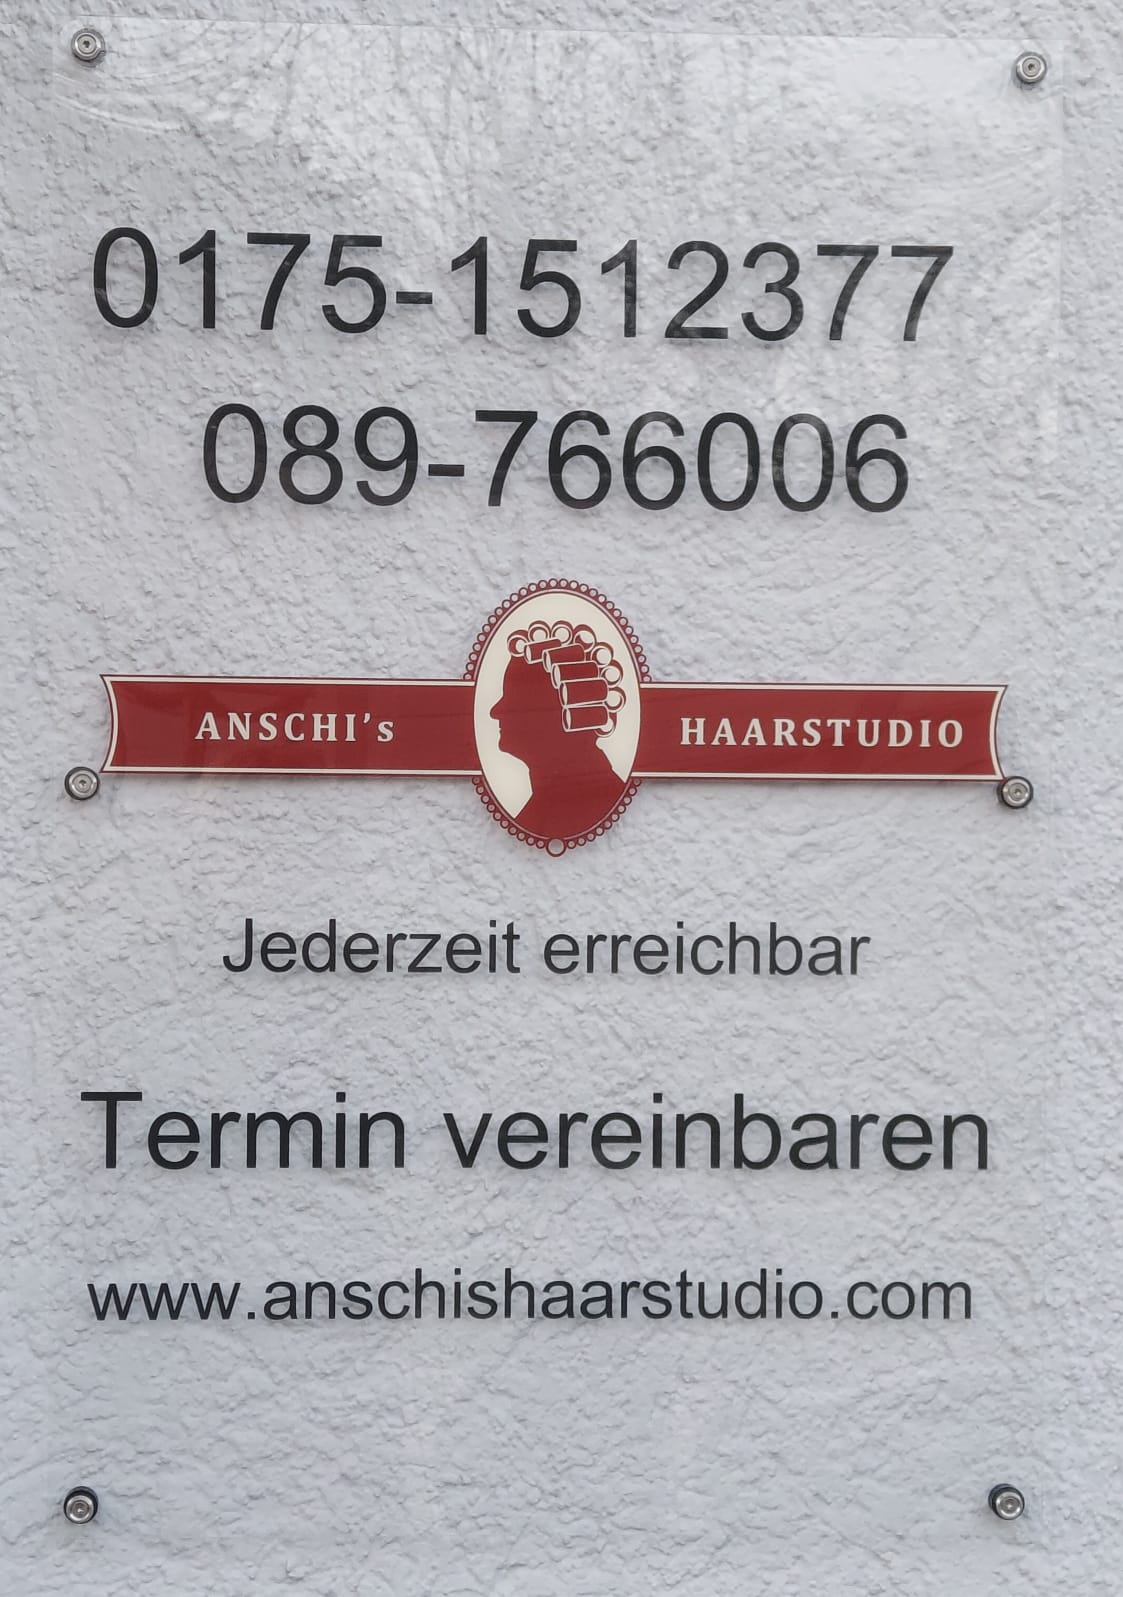 Anschi's Haarstudio - Münchner Original Friseur, Heckenstallerstr. 135 in München